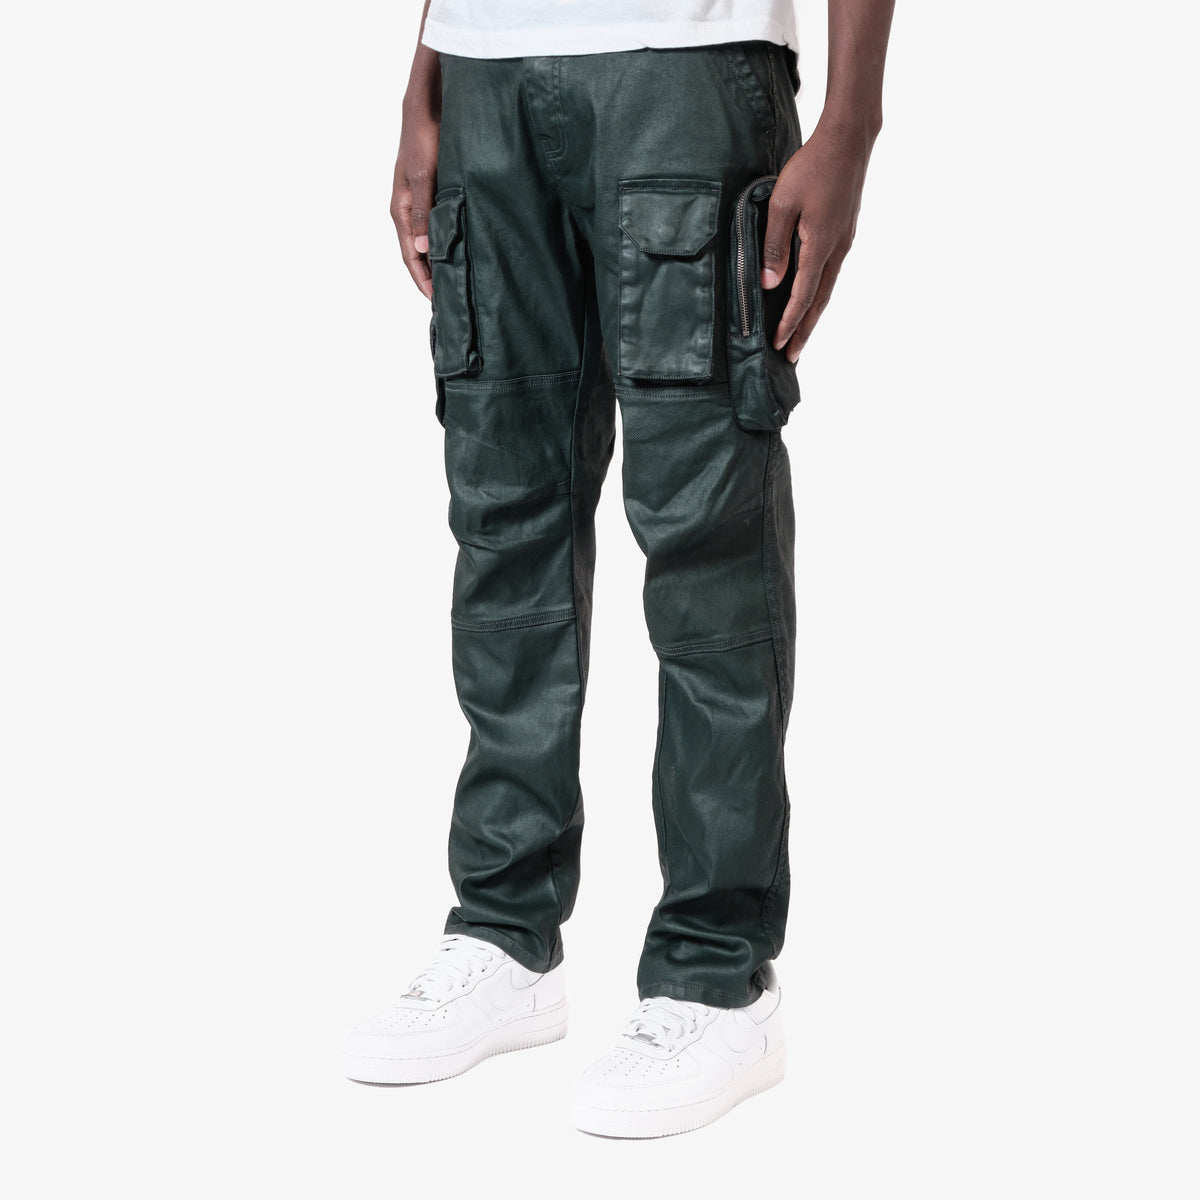 Buy Multi Pocket Cargo Pant Men's Jeans & Pants from Copper Rivet